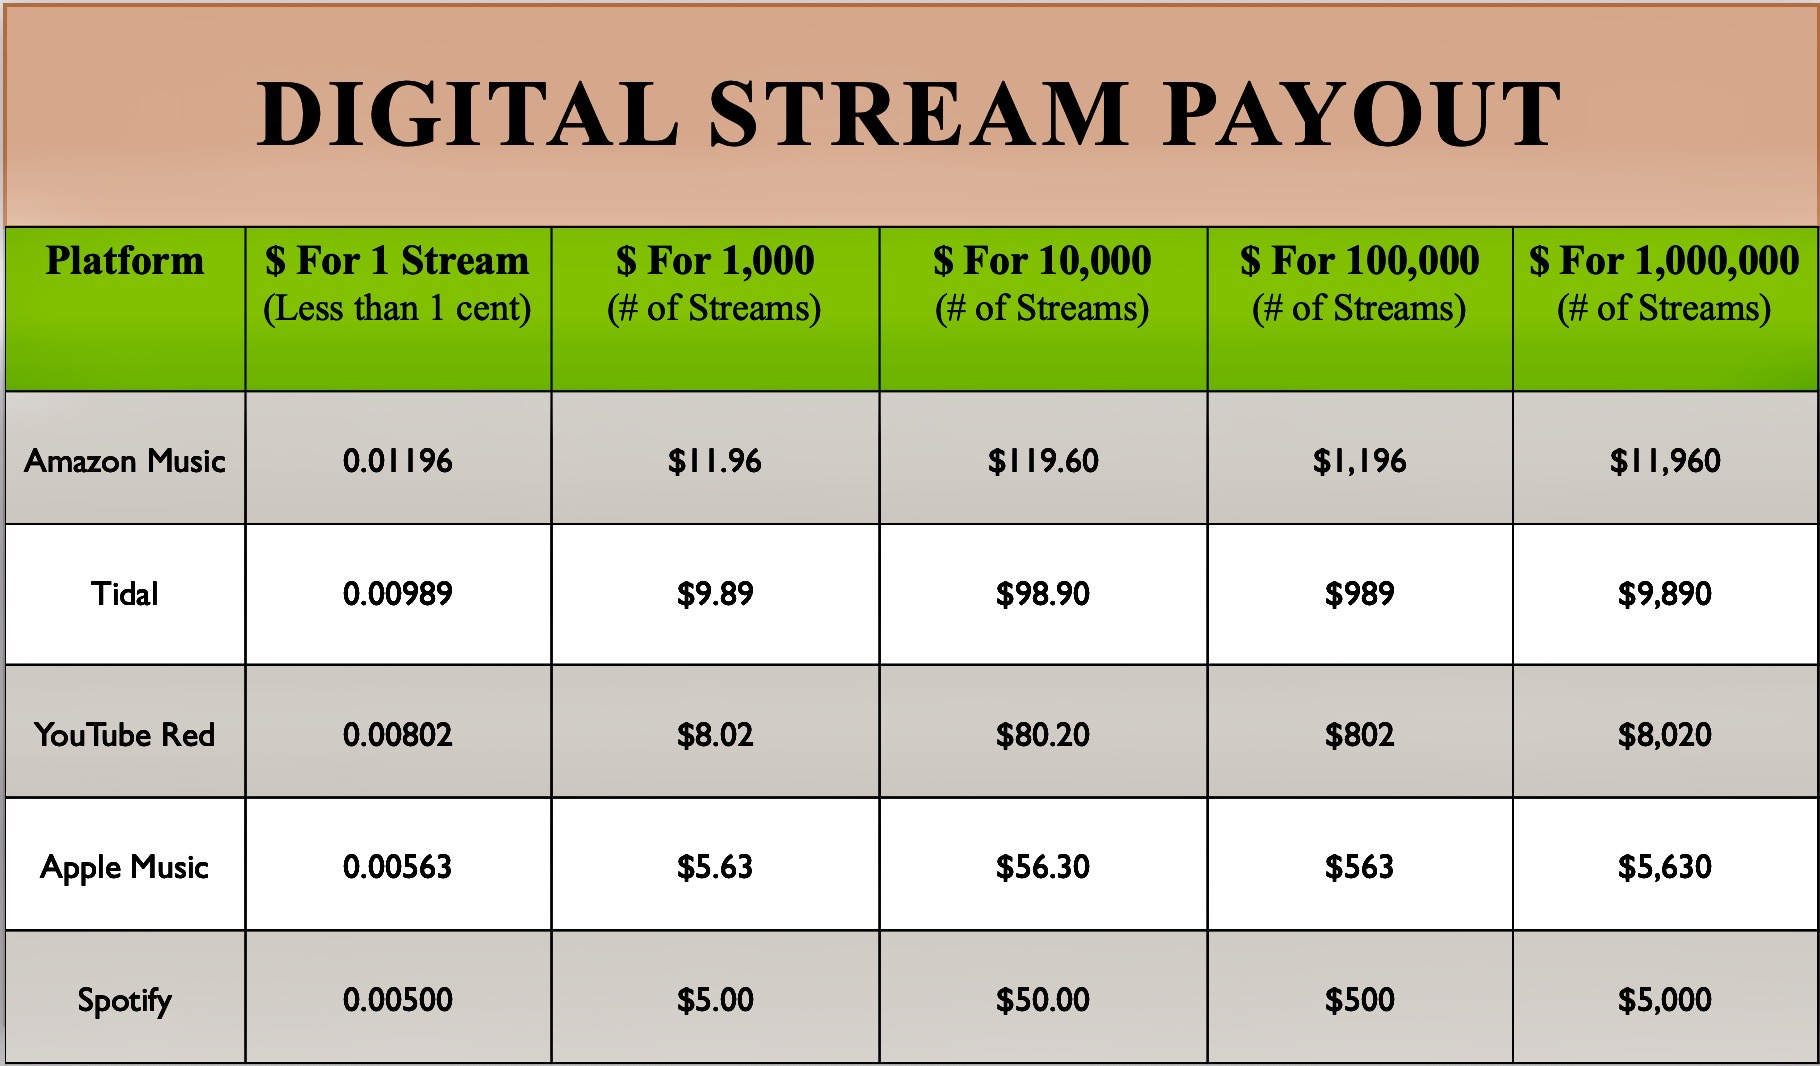 Digital Stream Payout 2020